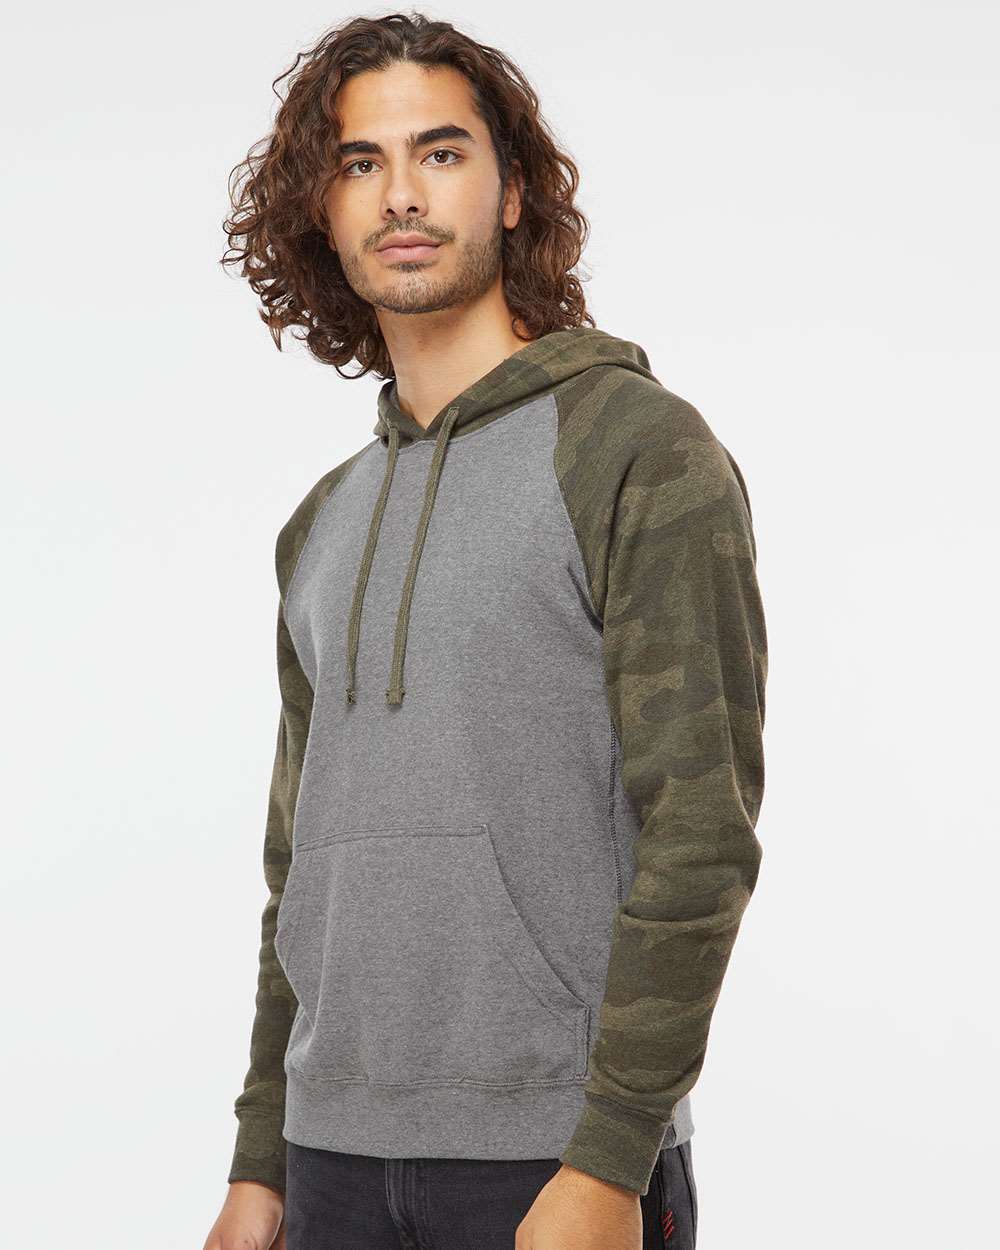 Independent Trading Co. Unisex Special Blend Raglan Hooded Sweatshirt PRM33SBP #colormdl_Nickel Heather/ Forest Camo